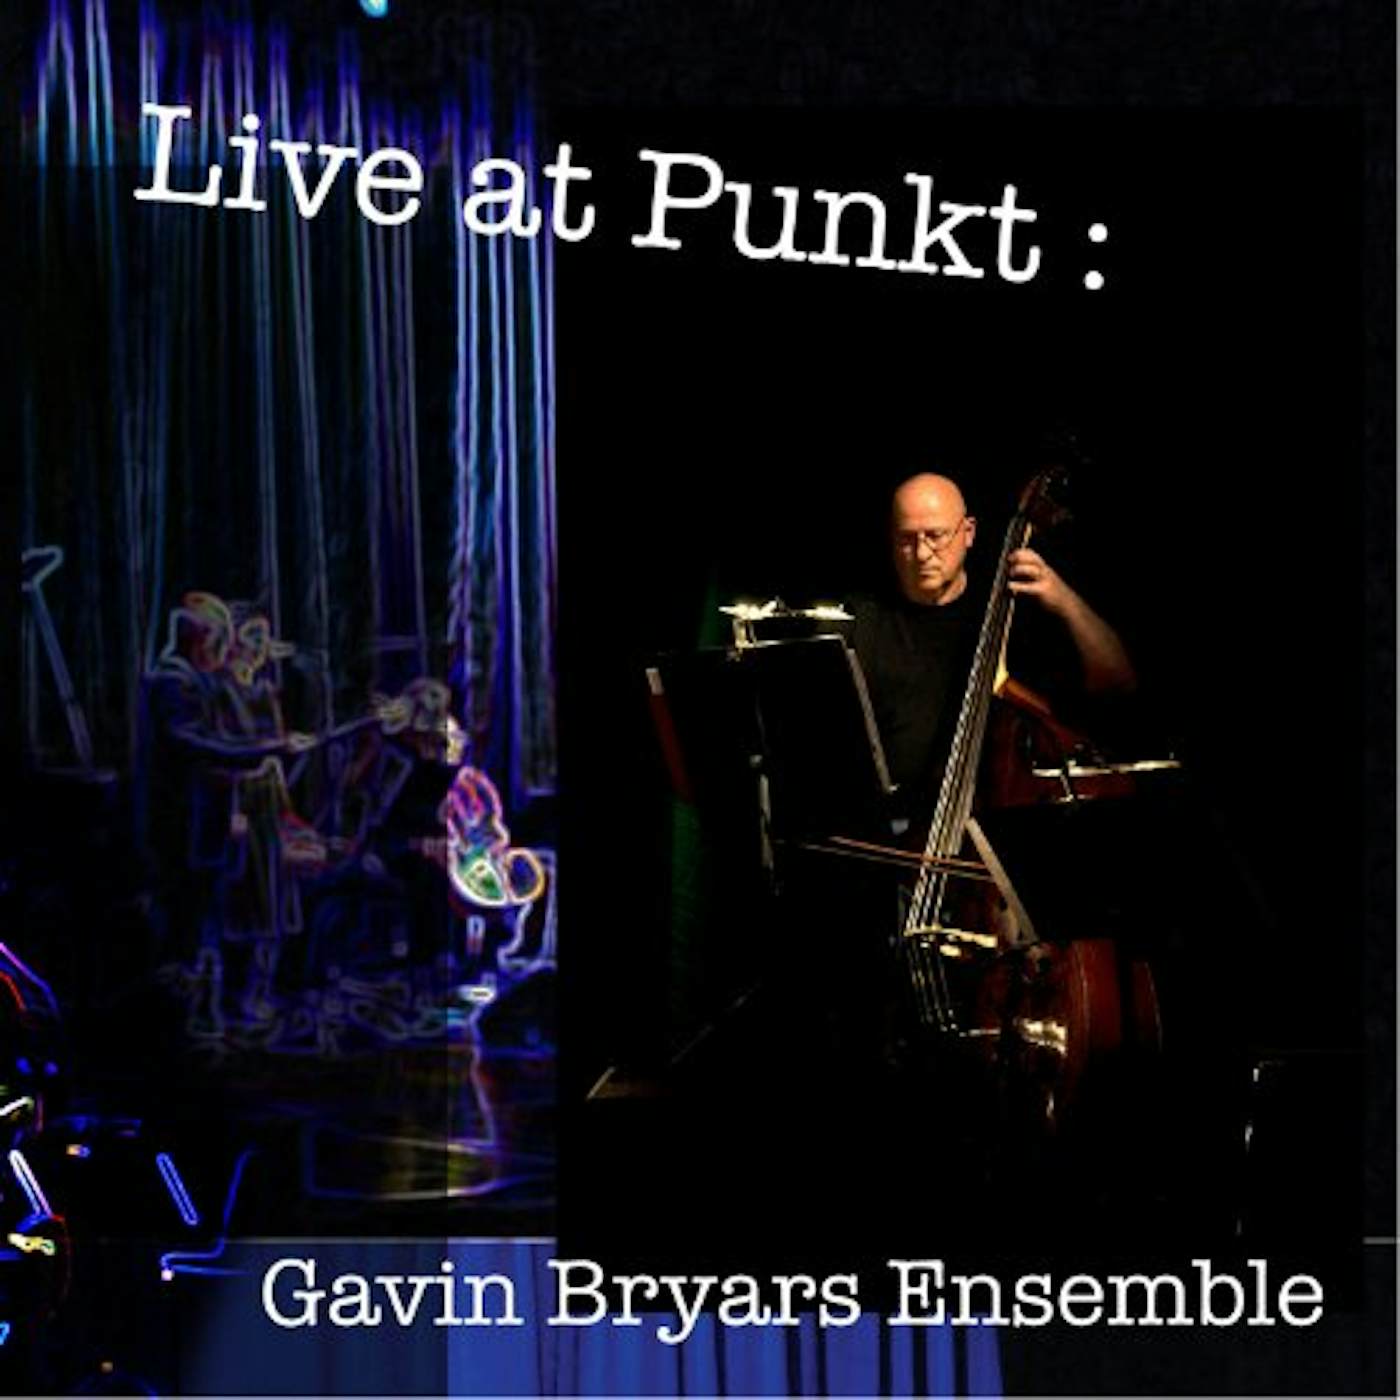 Gavin Bryars LIVE AT PUNKT CD